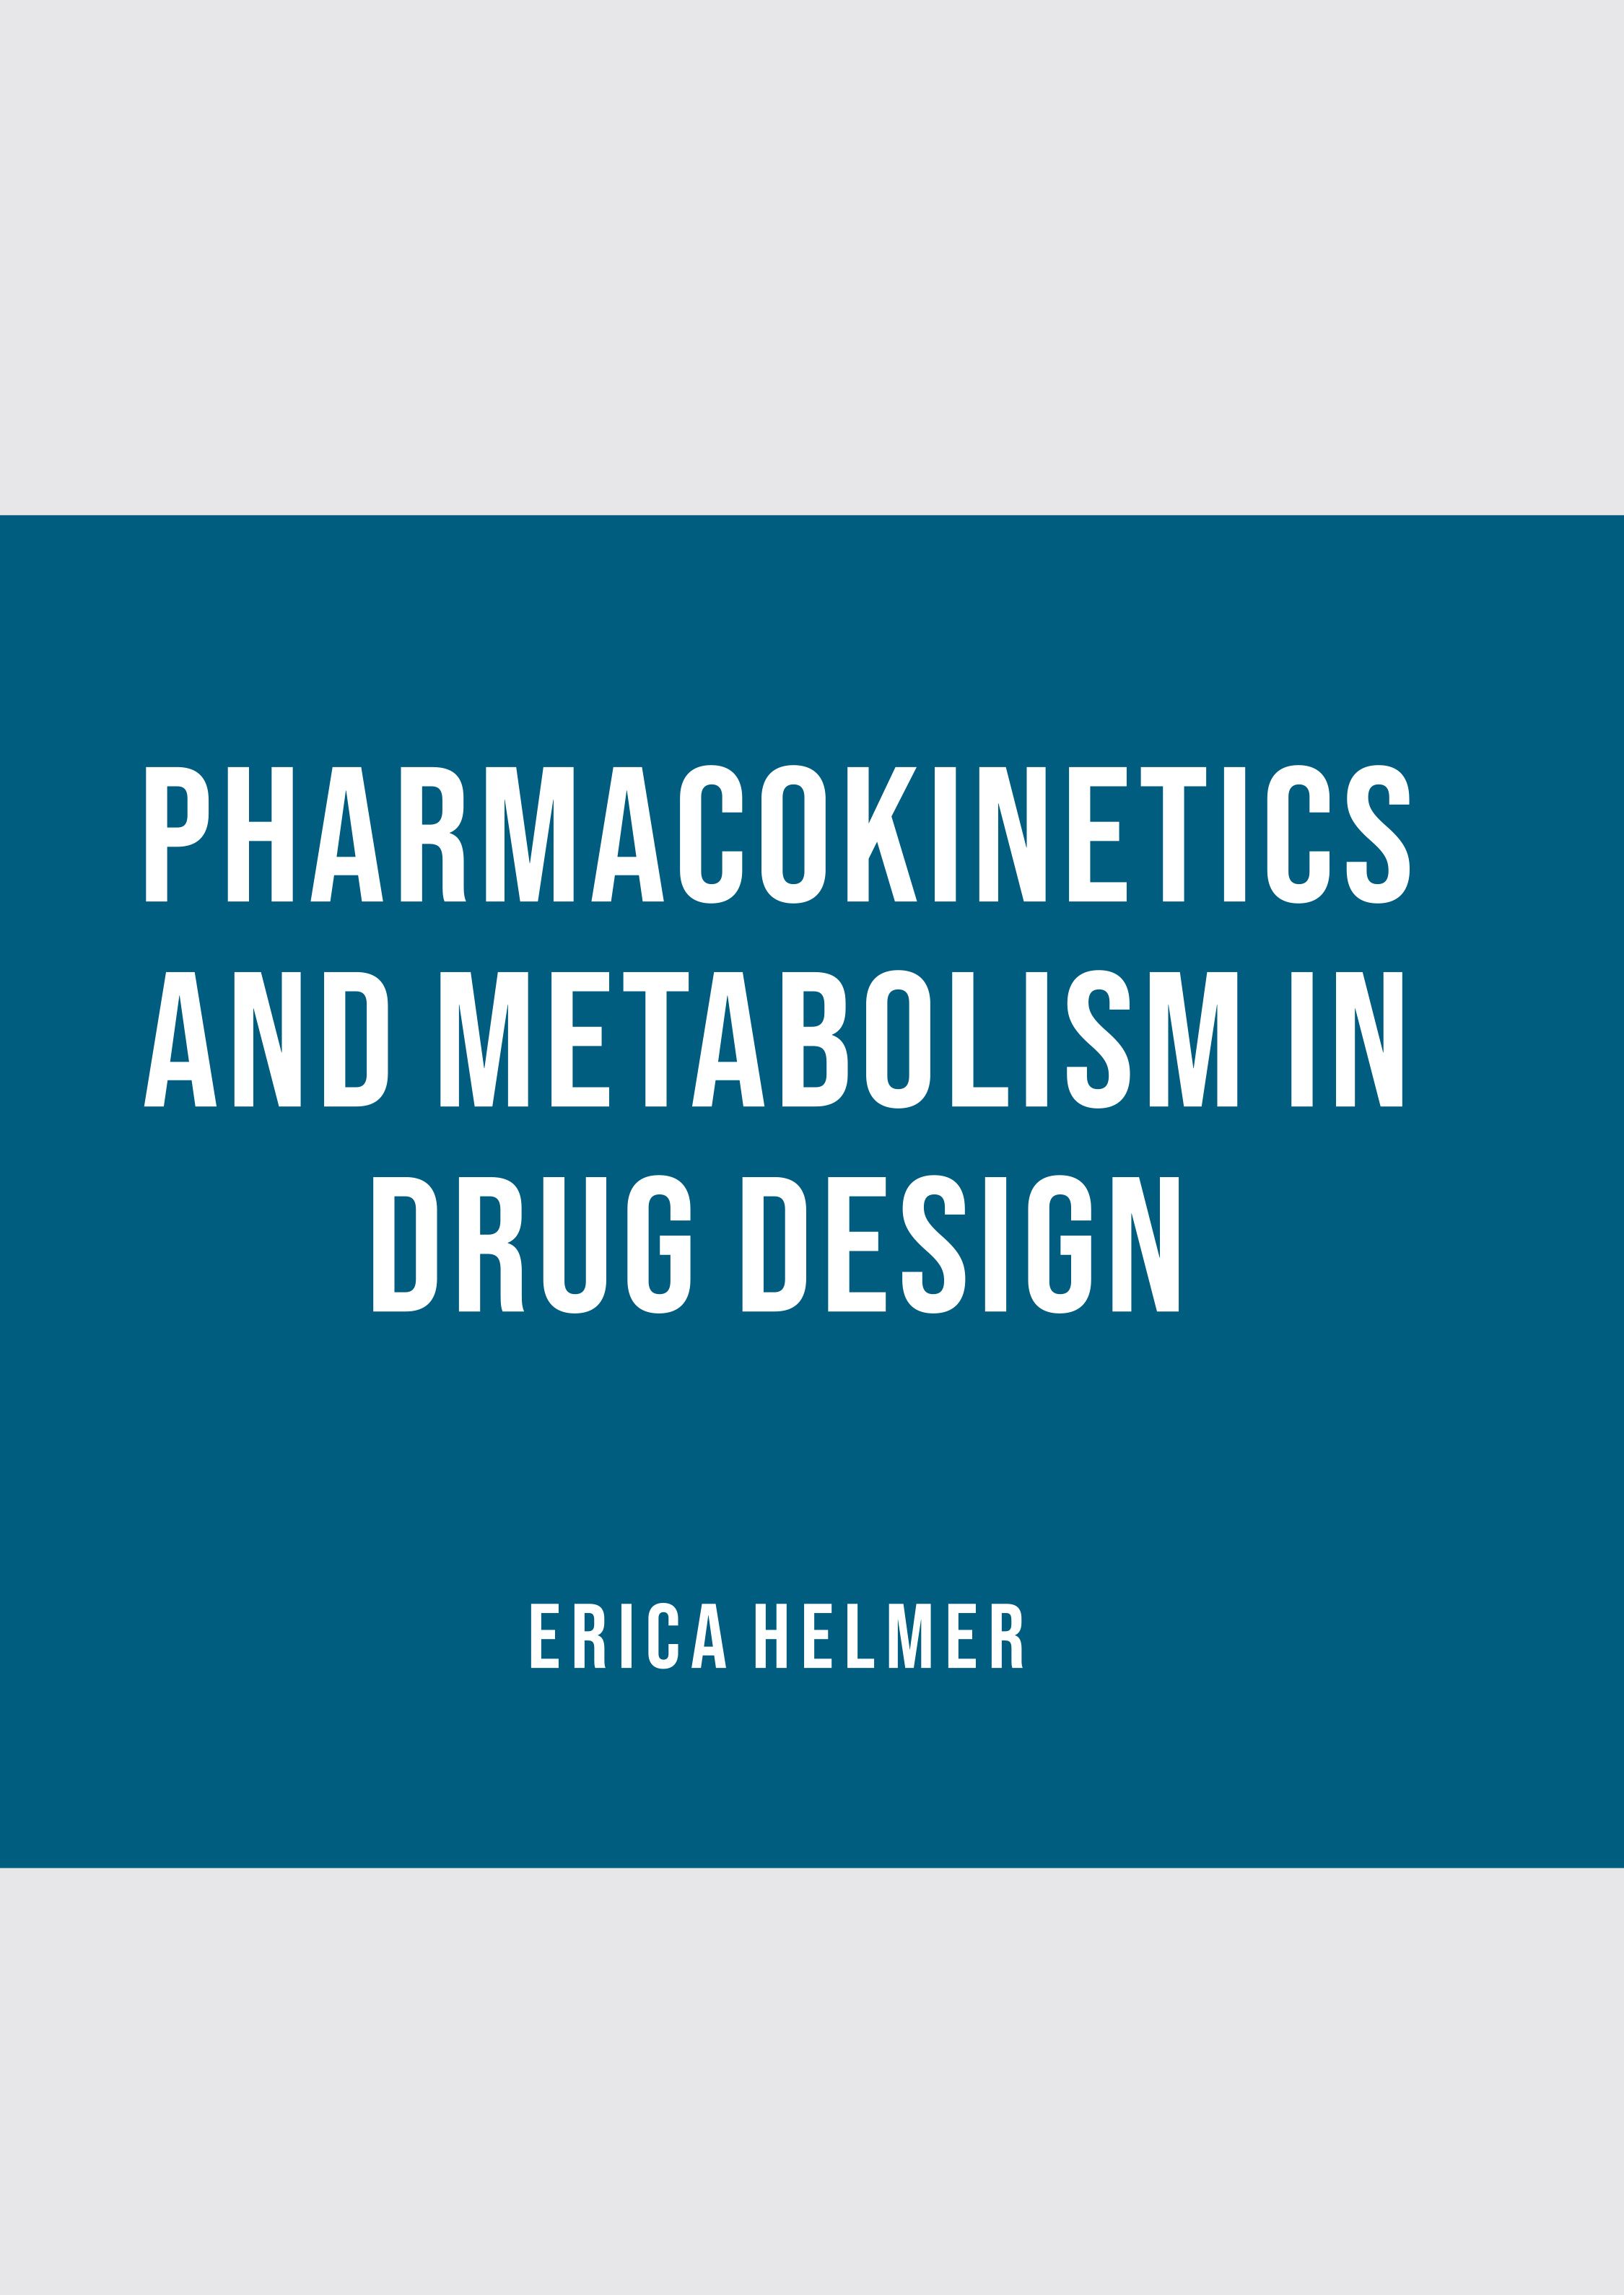 PHARMACOKINETICS AND METABOLISM IN DRUG DESIGN